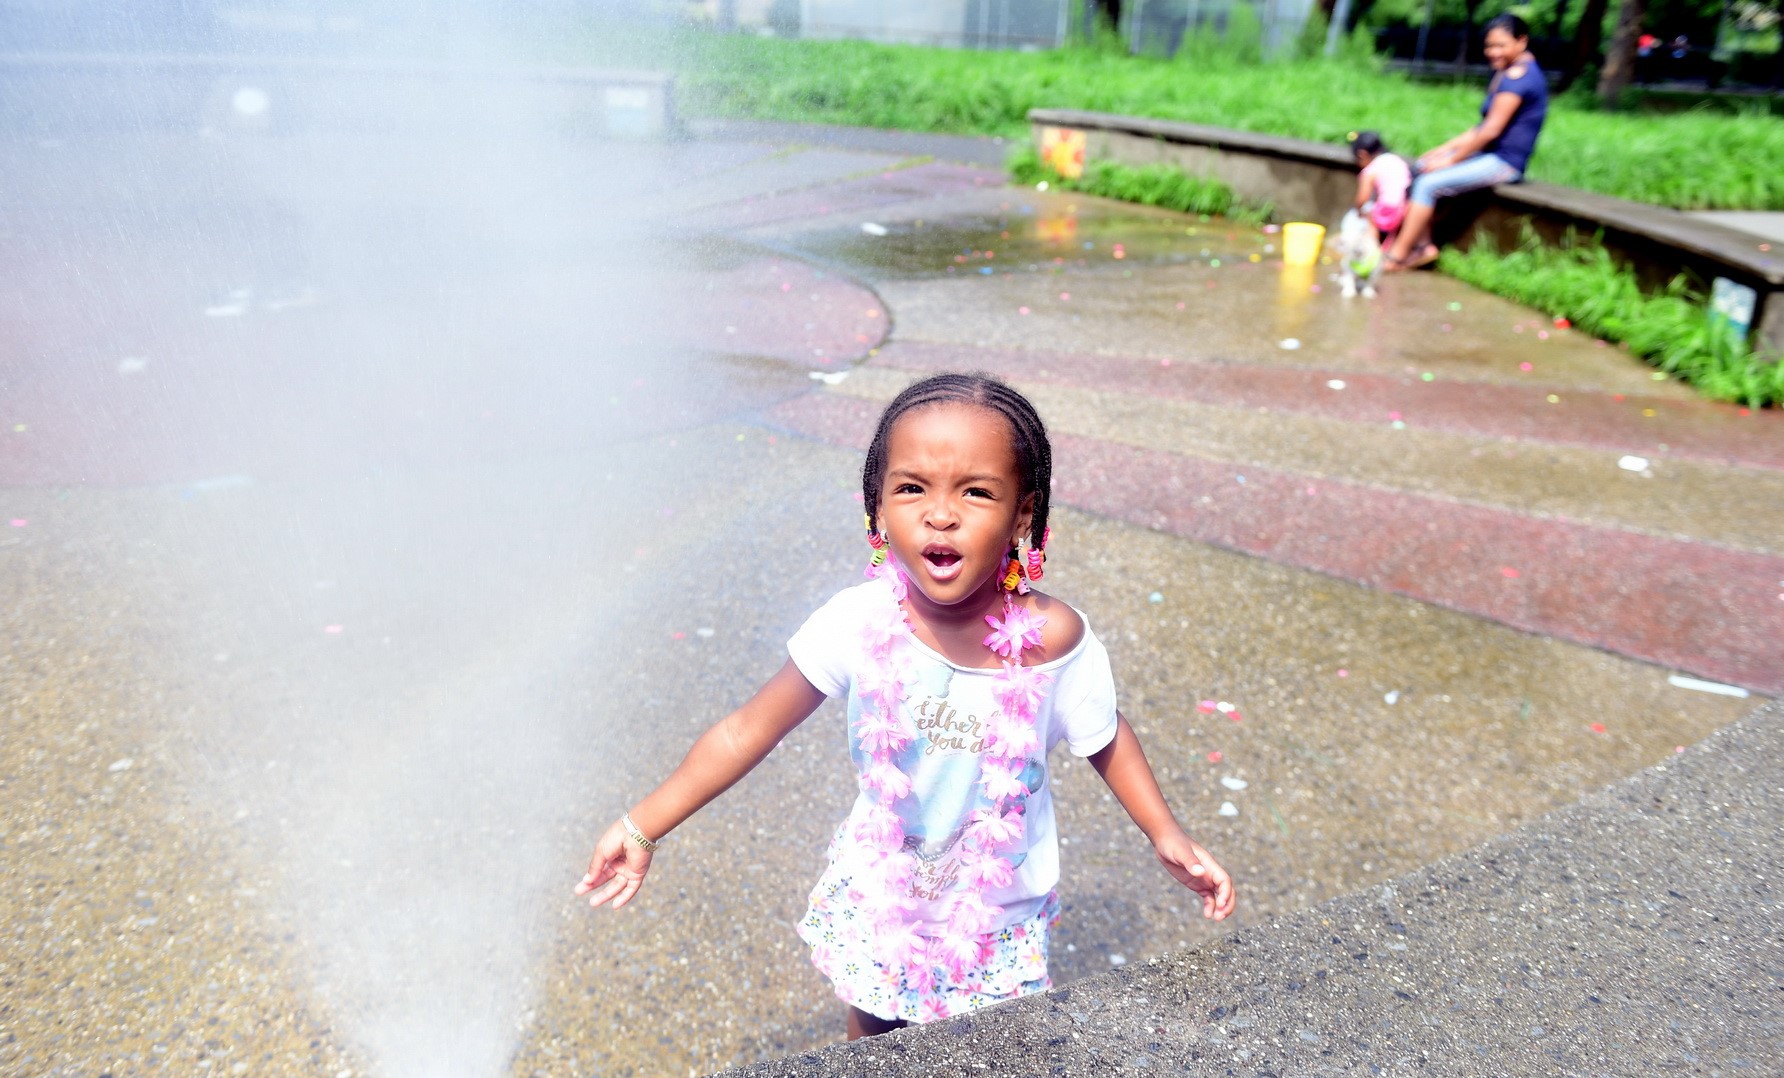 Spray showers at Crotona Park in the Bronx.